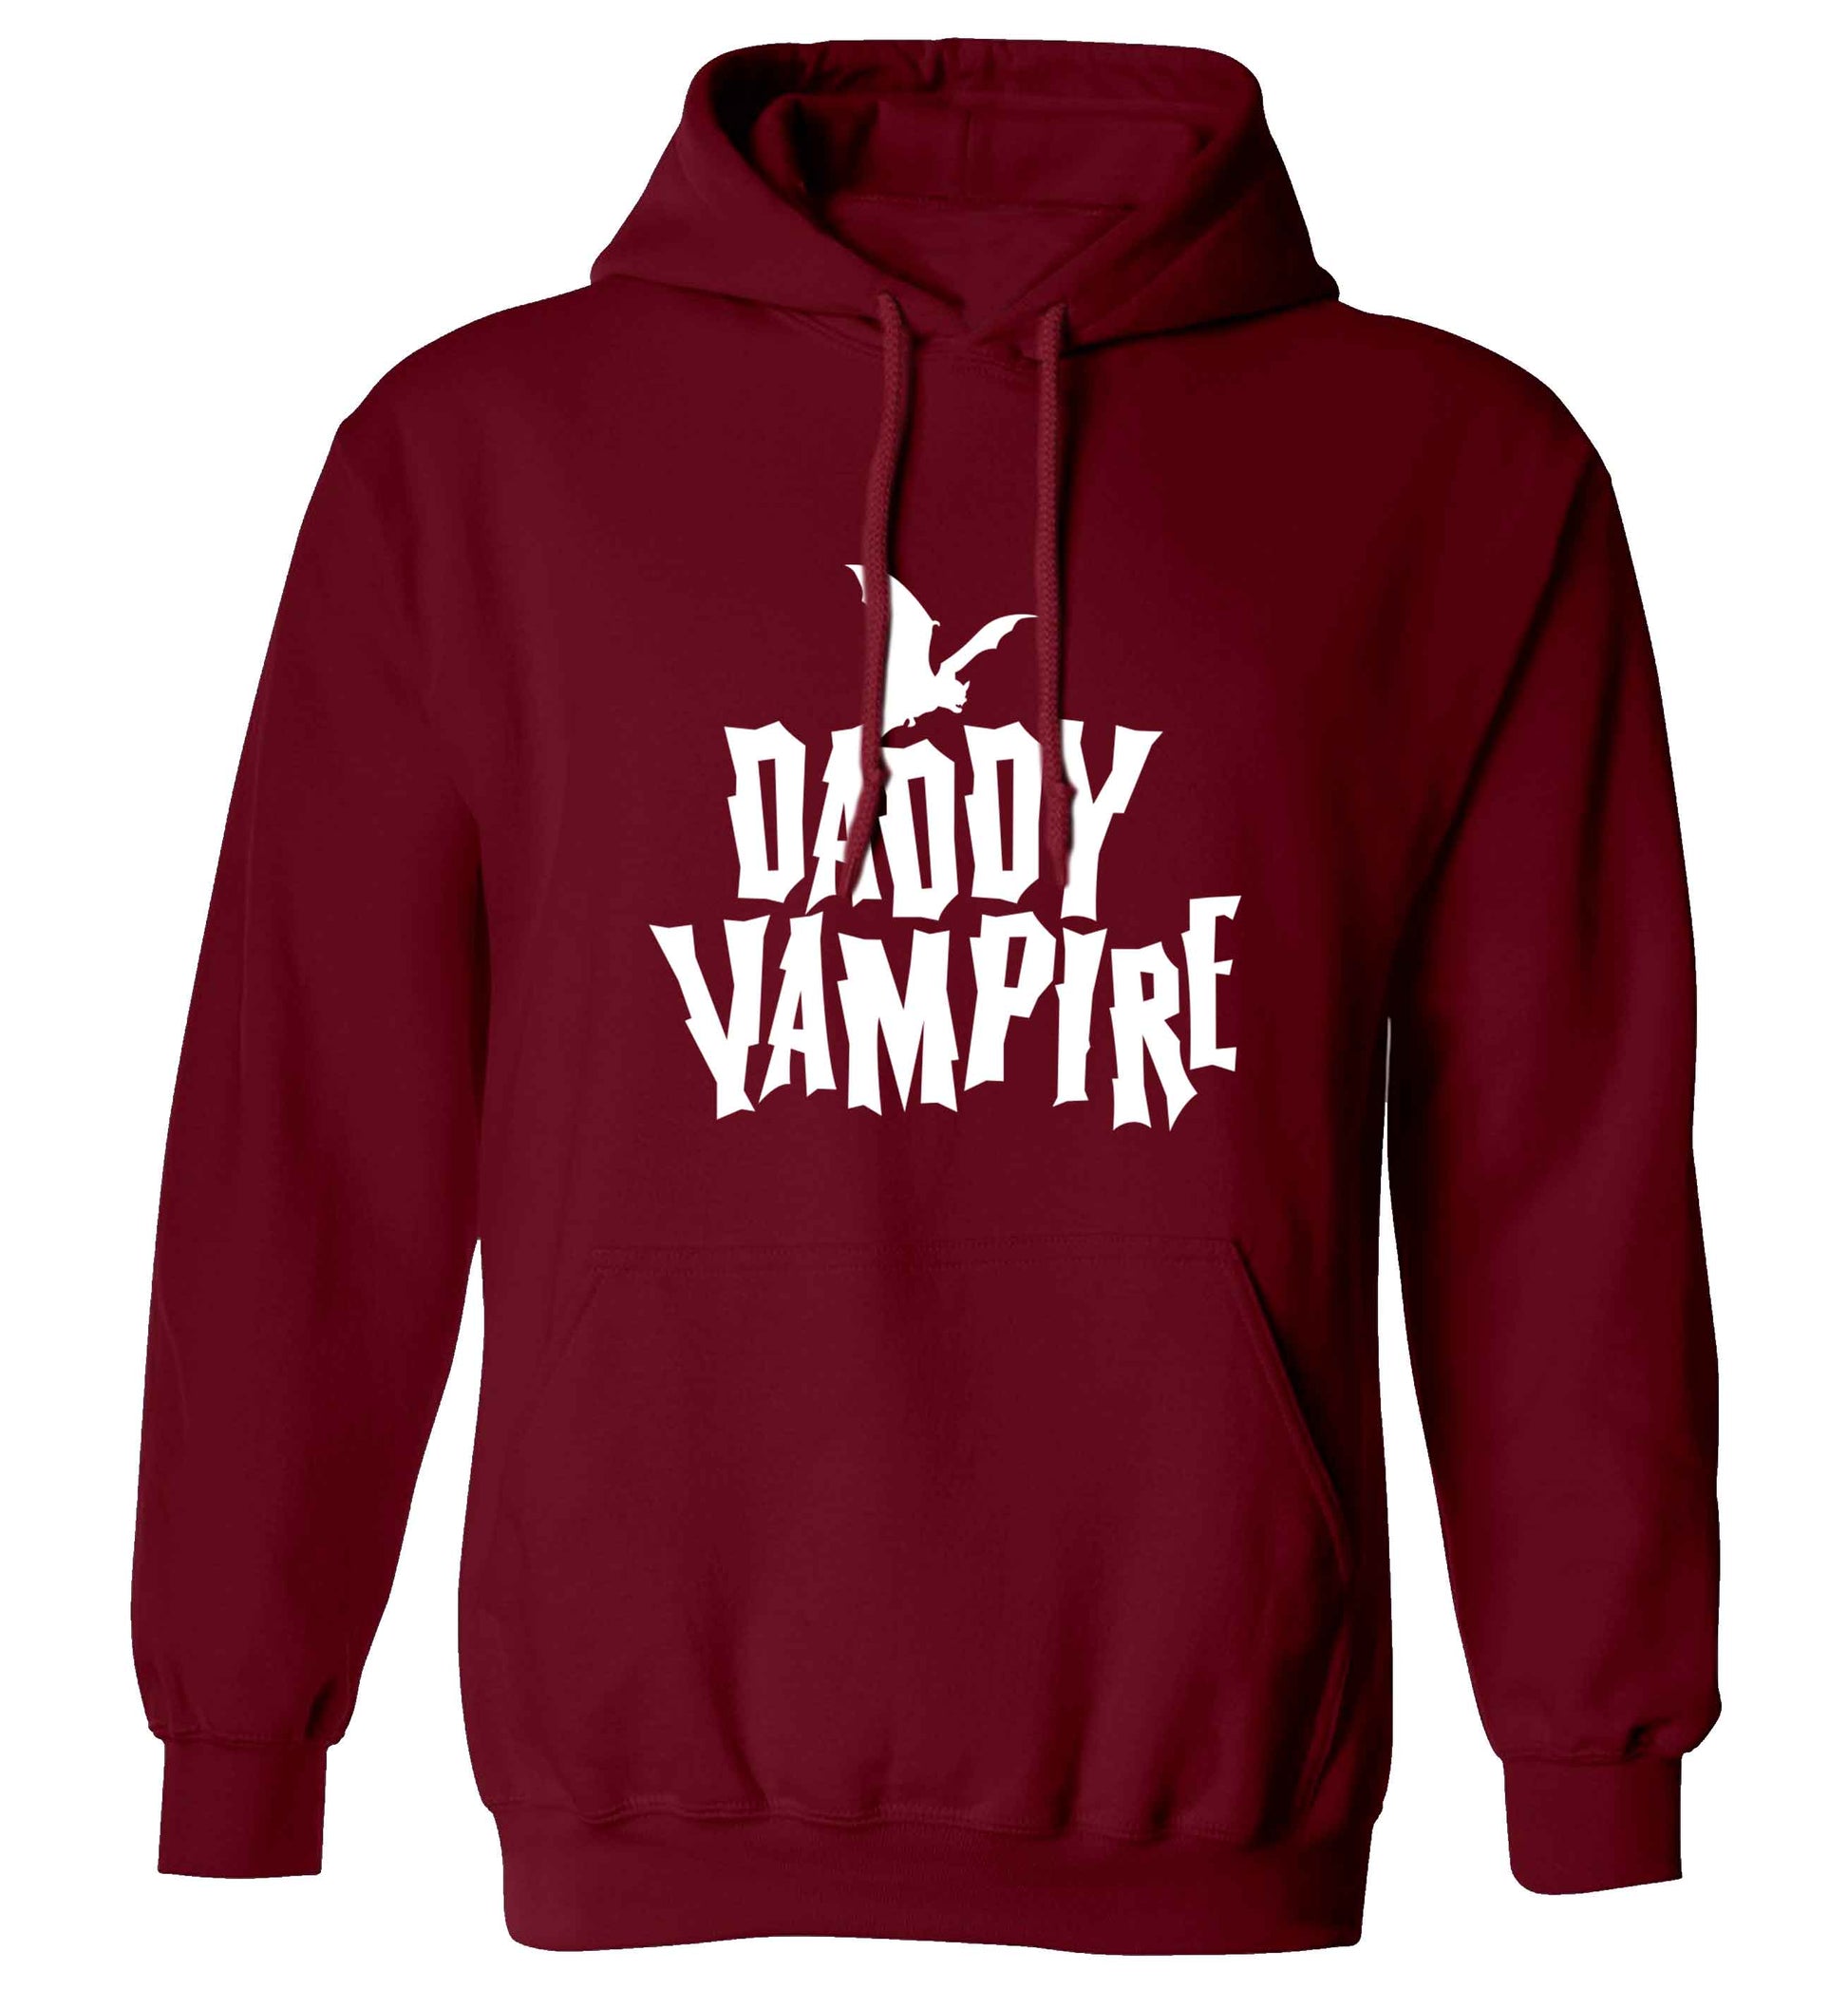 Daddy vampire adults unisex maroon hoodie 2XL